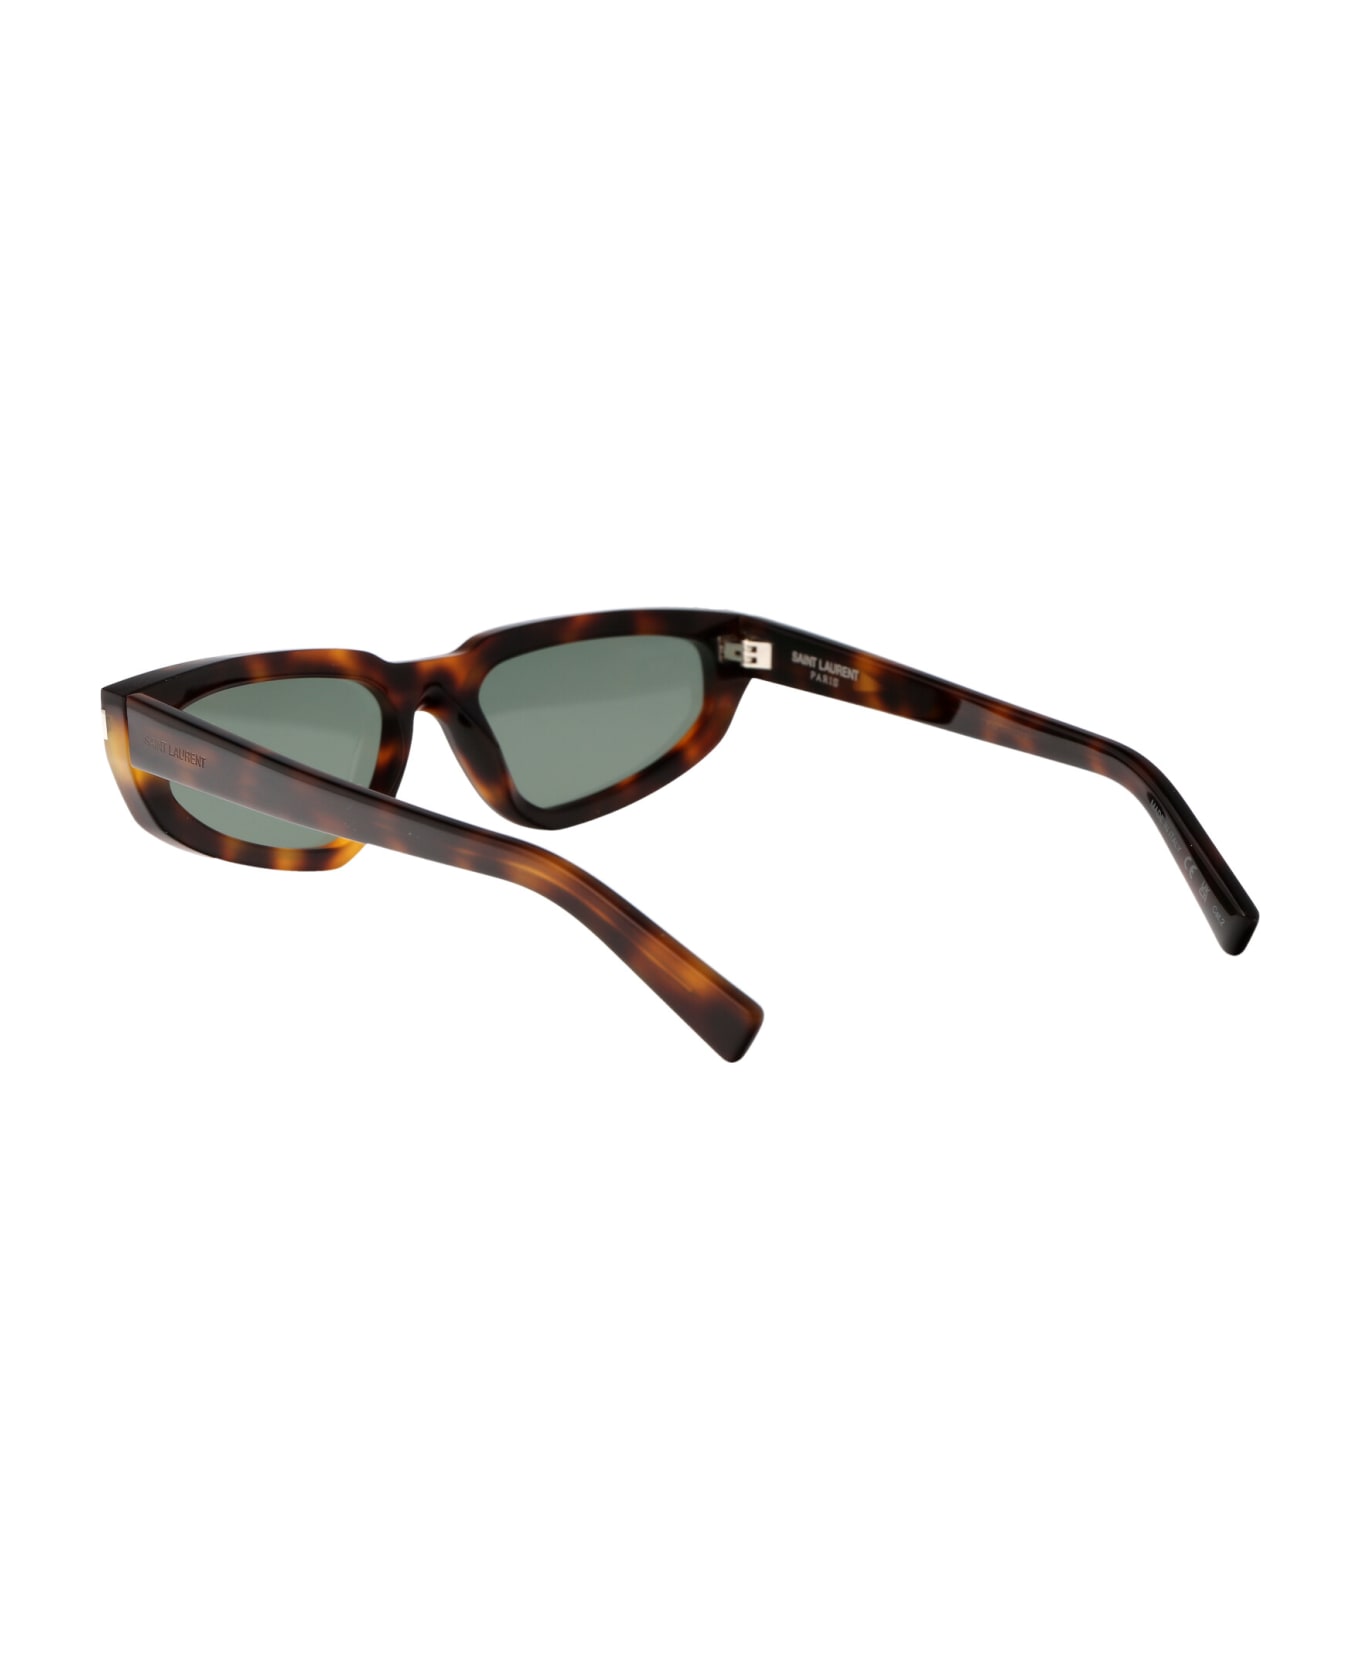 Saint Laurent Eyewear Sl 634 Nova Sunglasses - 003 HAVANA HAVANA GREEN